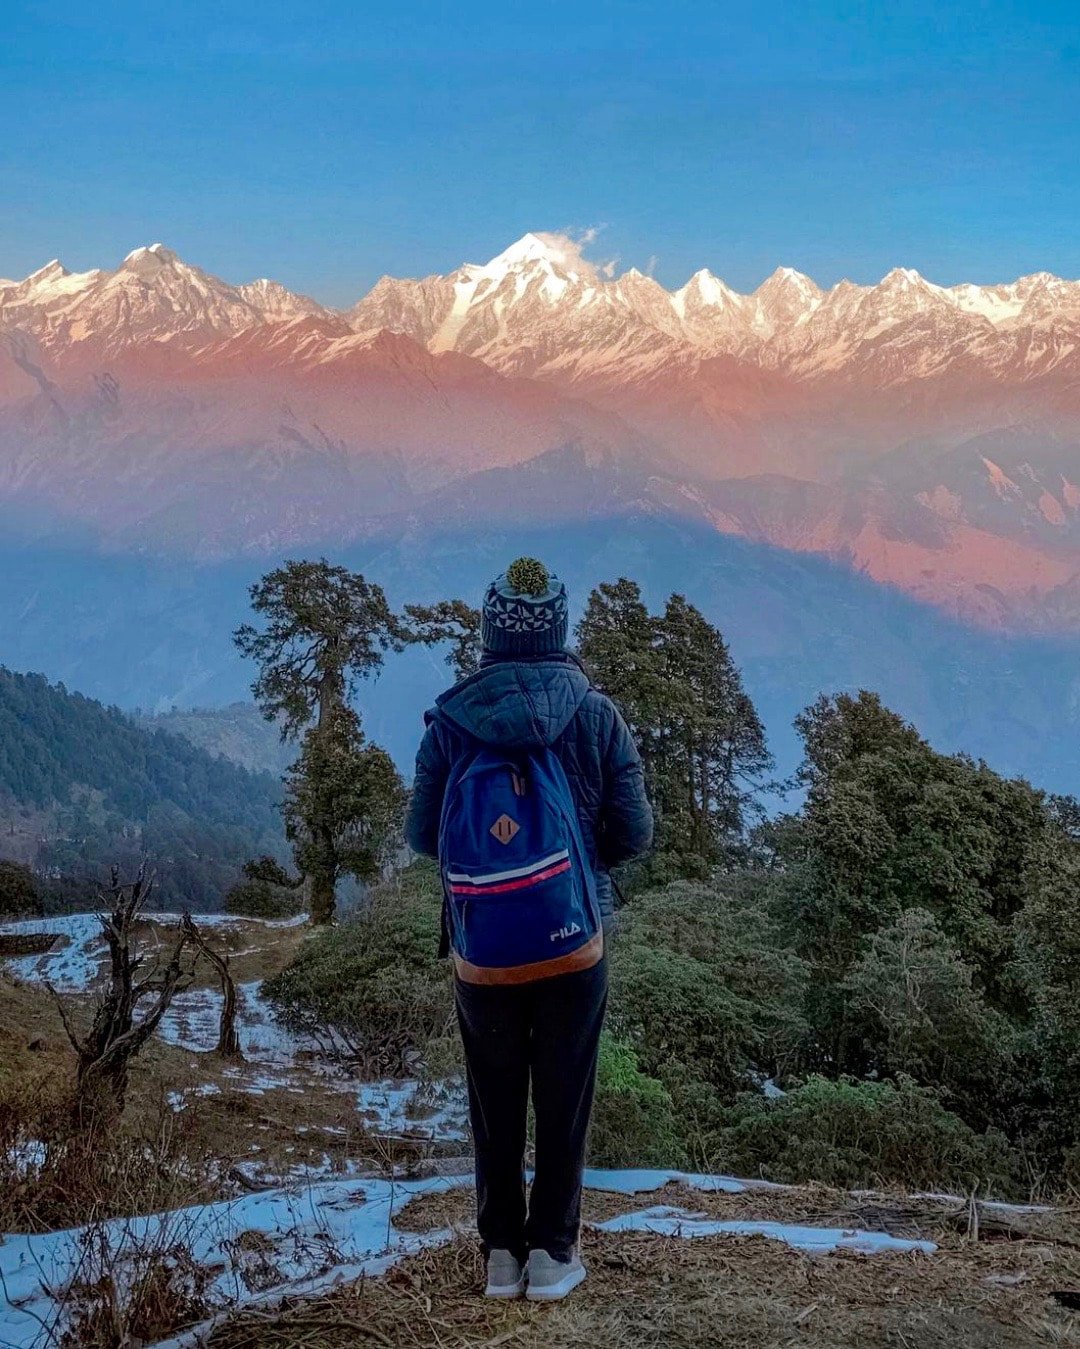 Munsiyari Panchachuli Peaks Image by Neha Rawat Instagram account